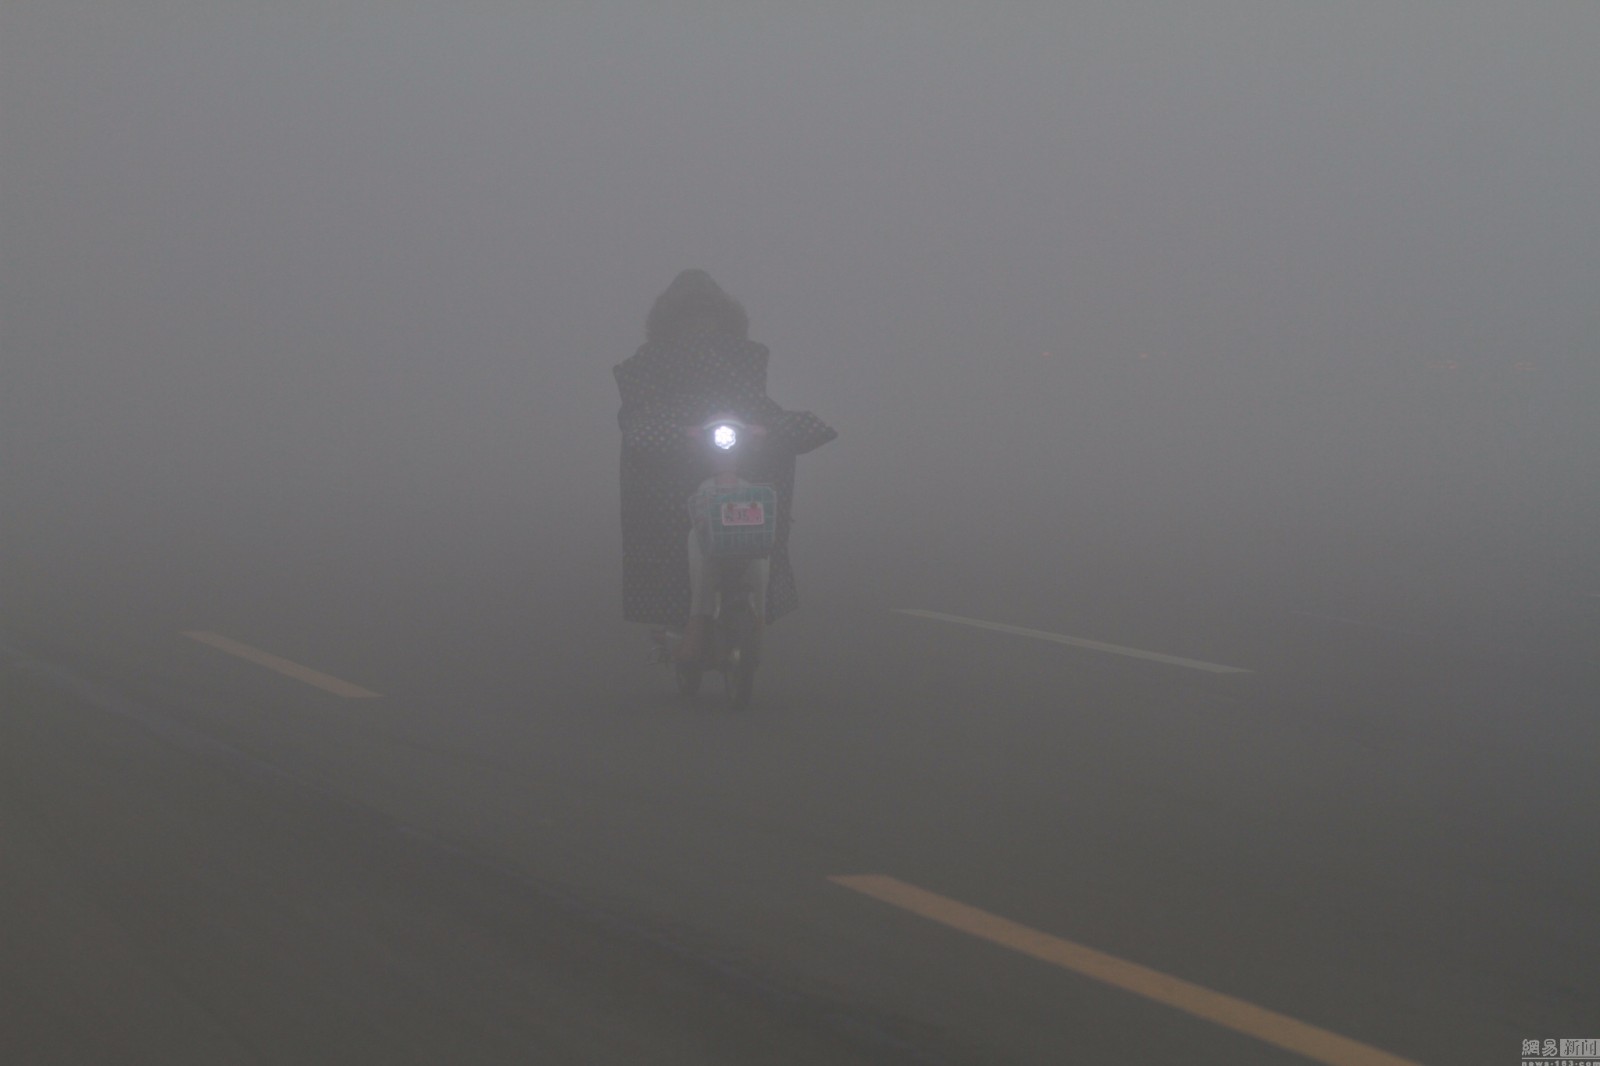 Heavy smog hits Shandong province on November 30, 2015